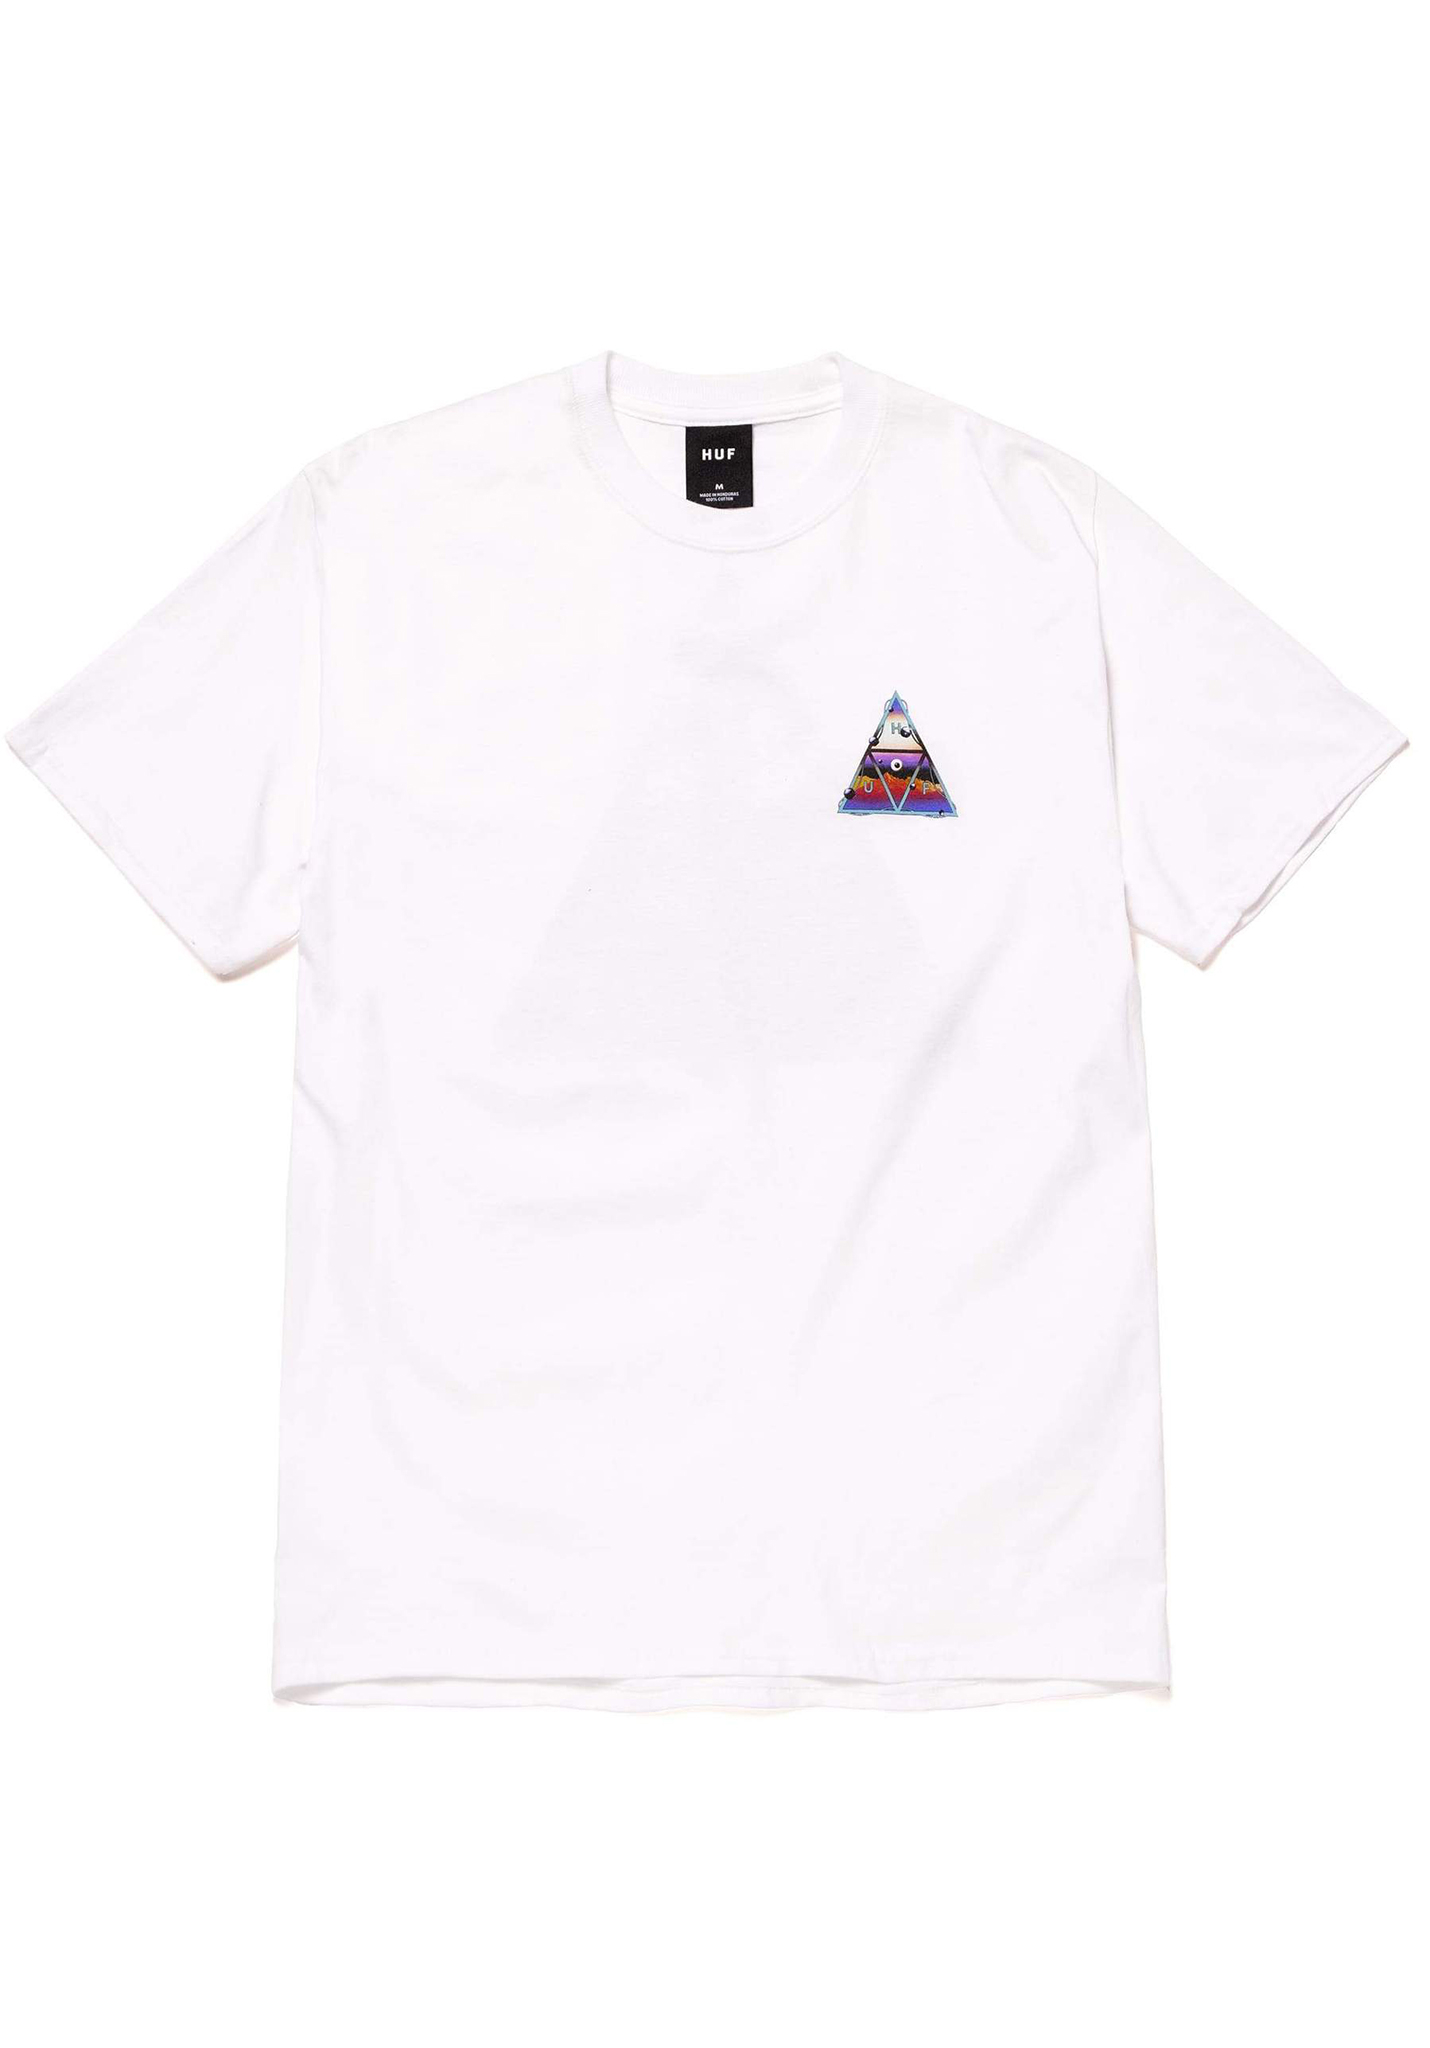 HUF Altered State T-Shirt weiß XL